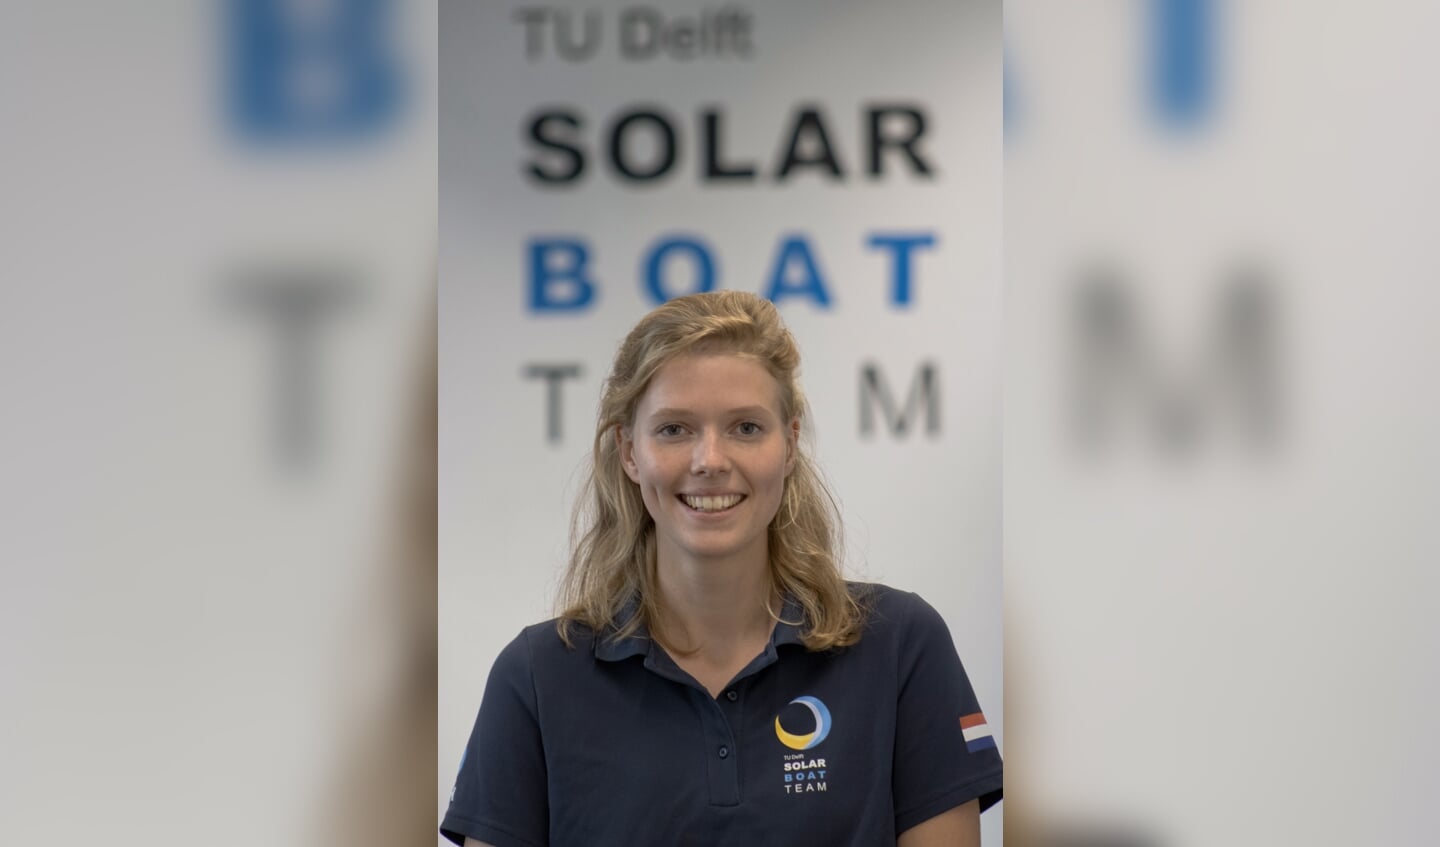 Laura Hurenkamp van het TU Delft Solar Boat Team.